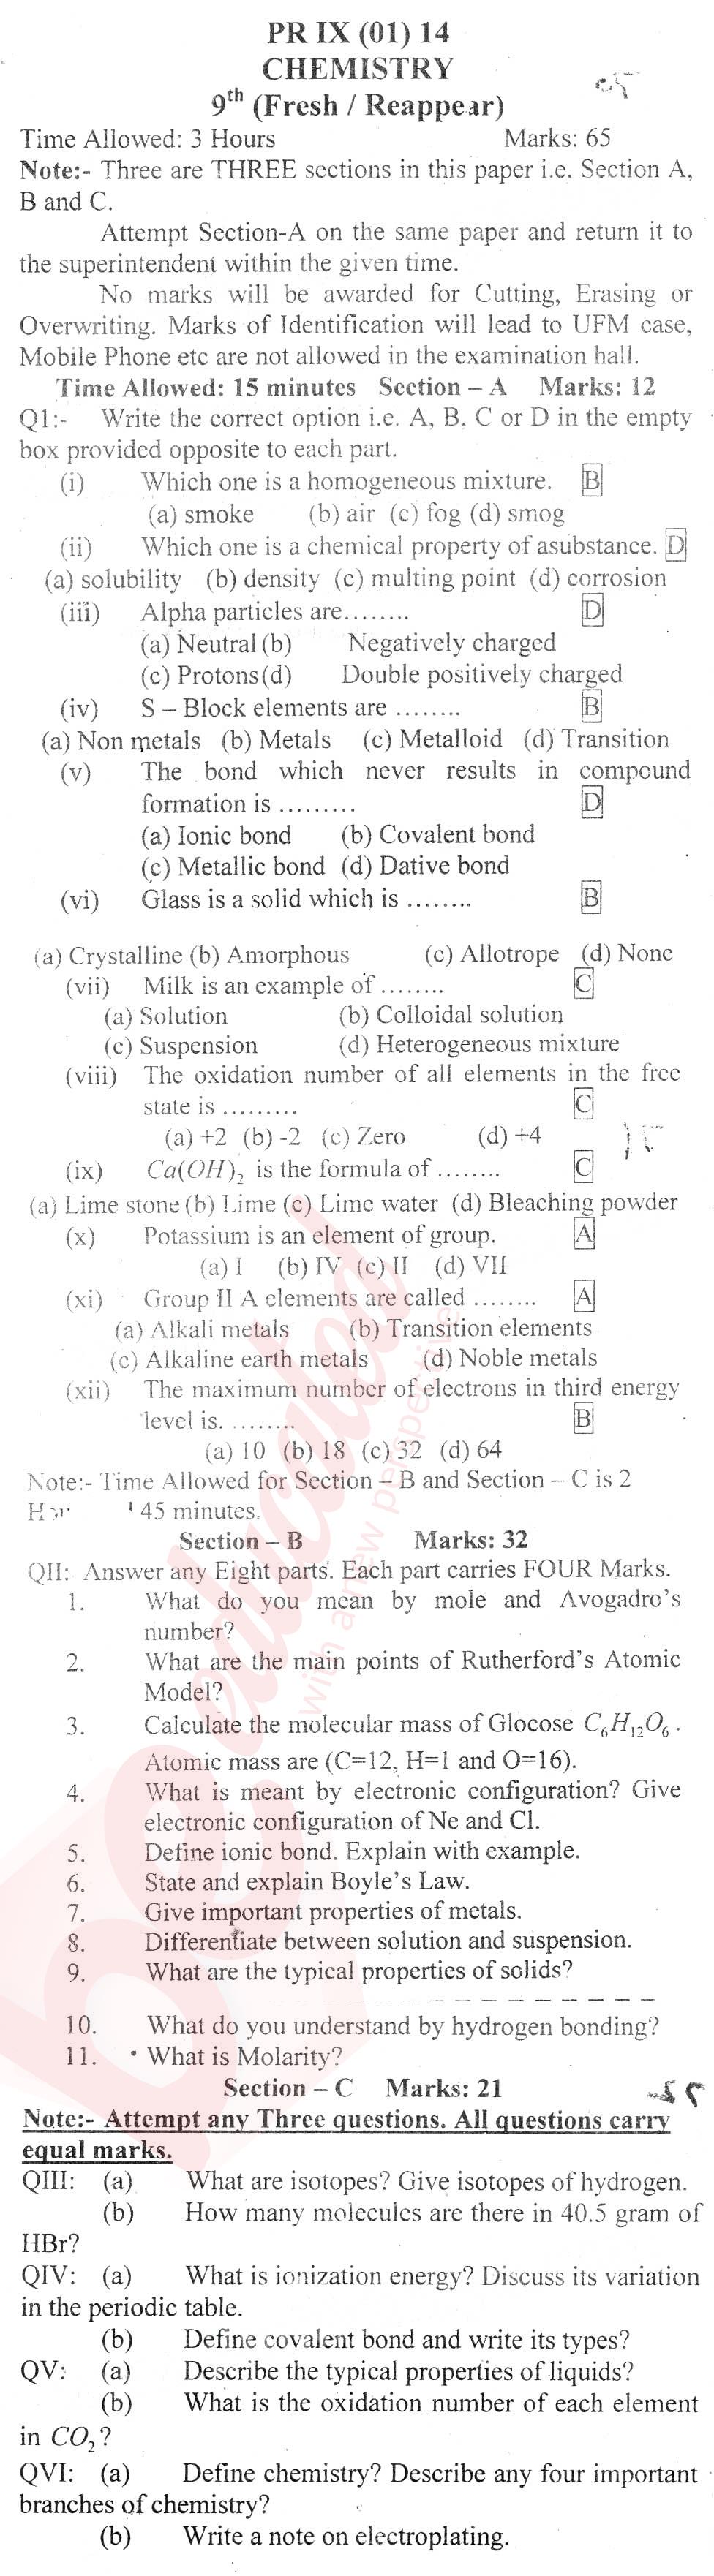 Chemistry 9th English Medium Past Paper Group 1 BISE DI Khan 2014